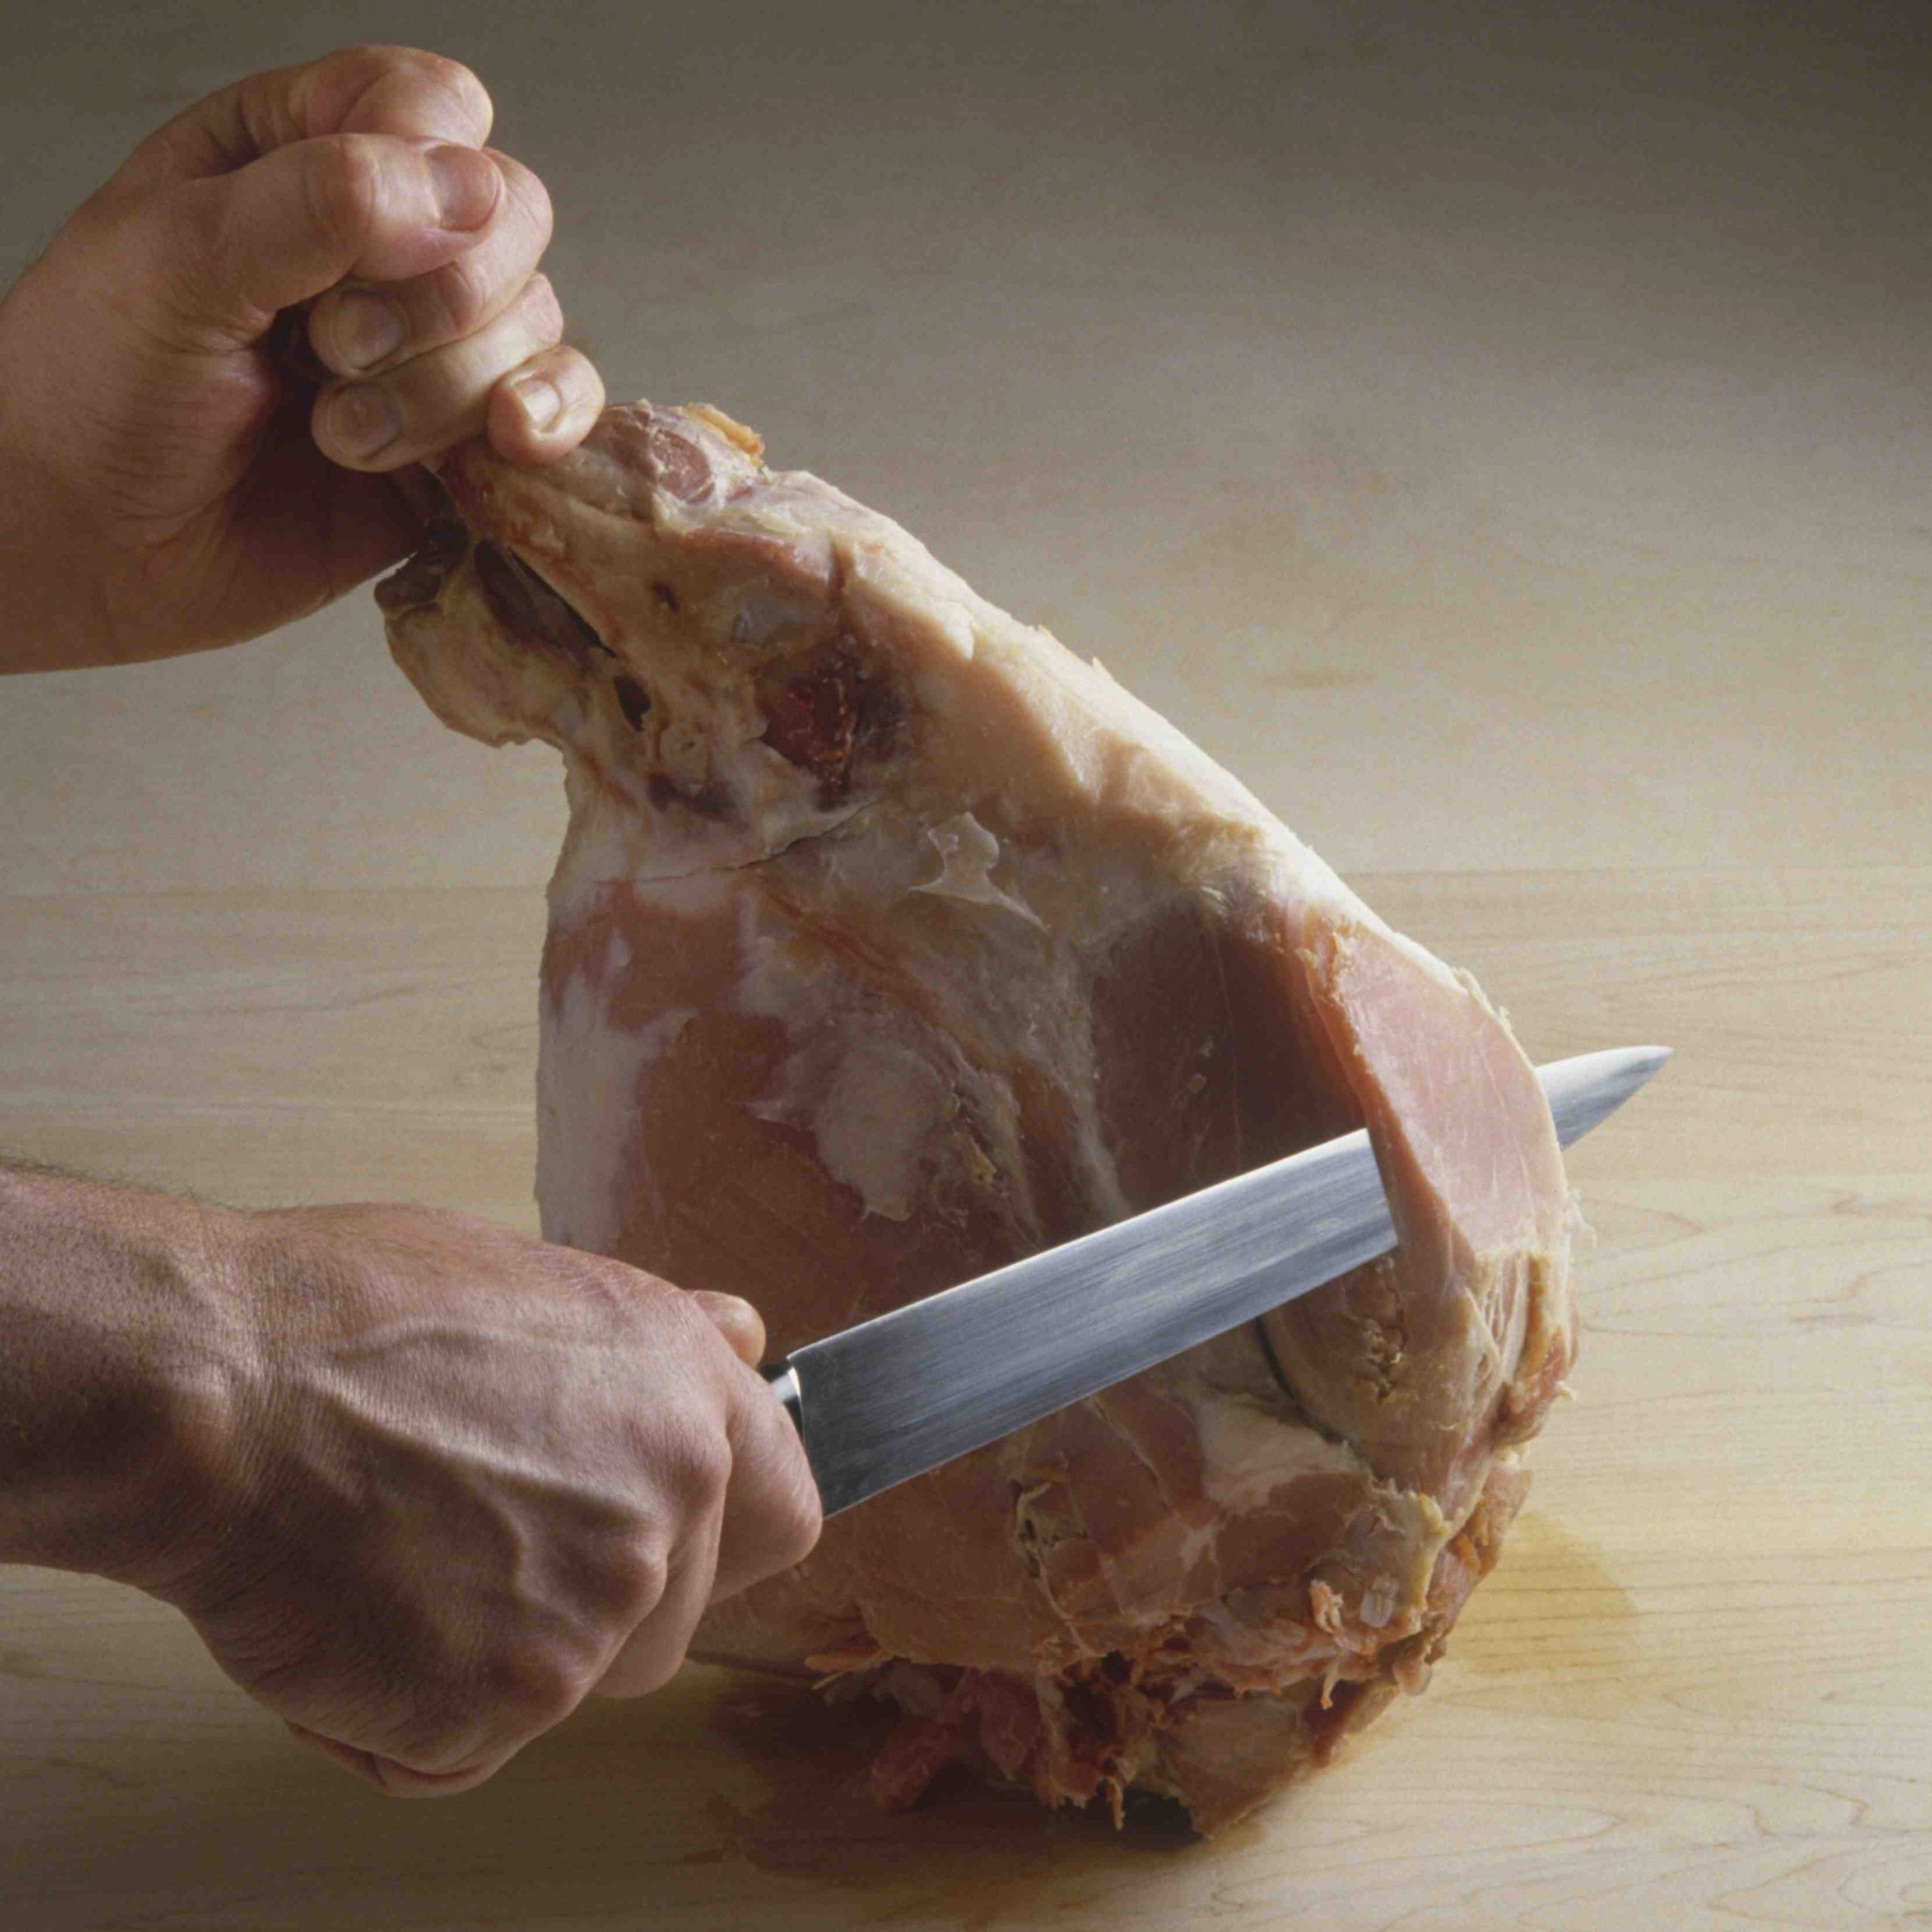 Do you cover a precooked ham when baking?